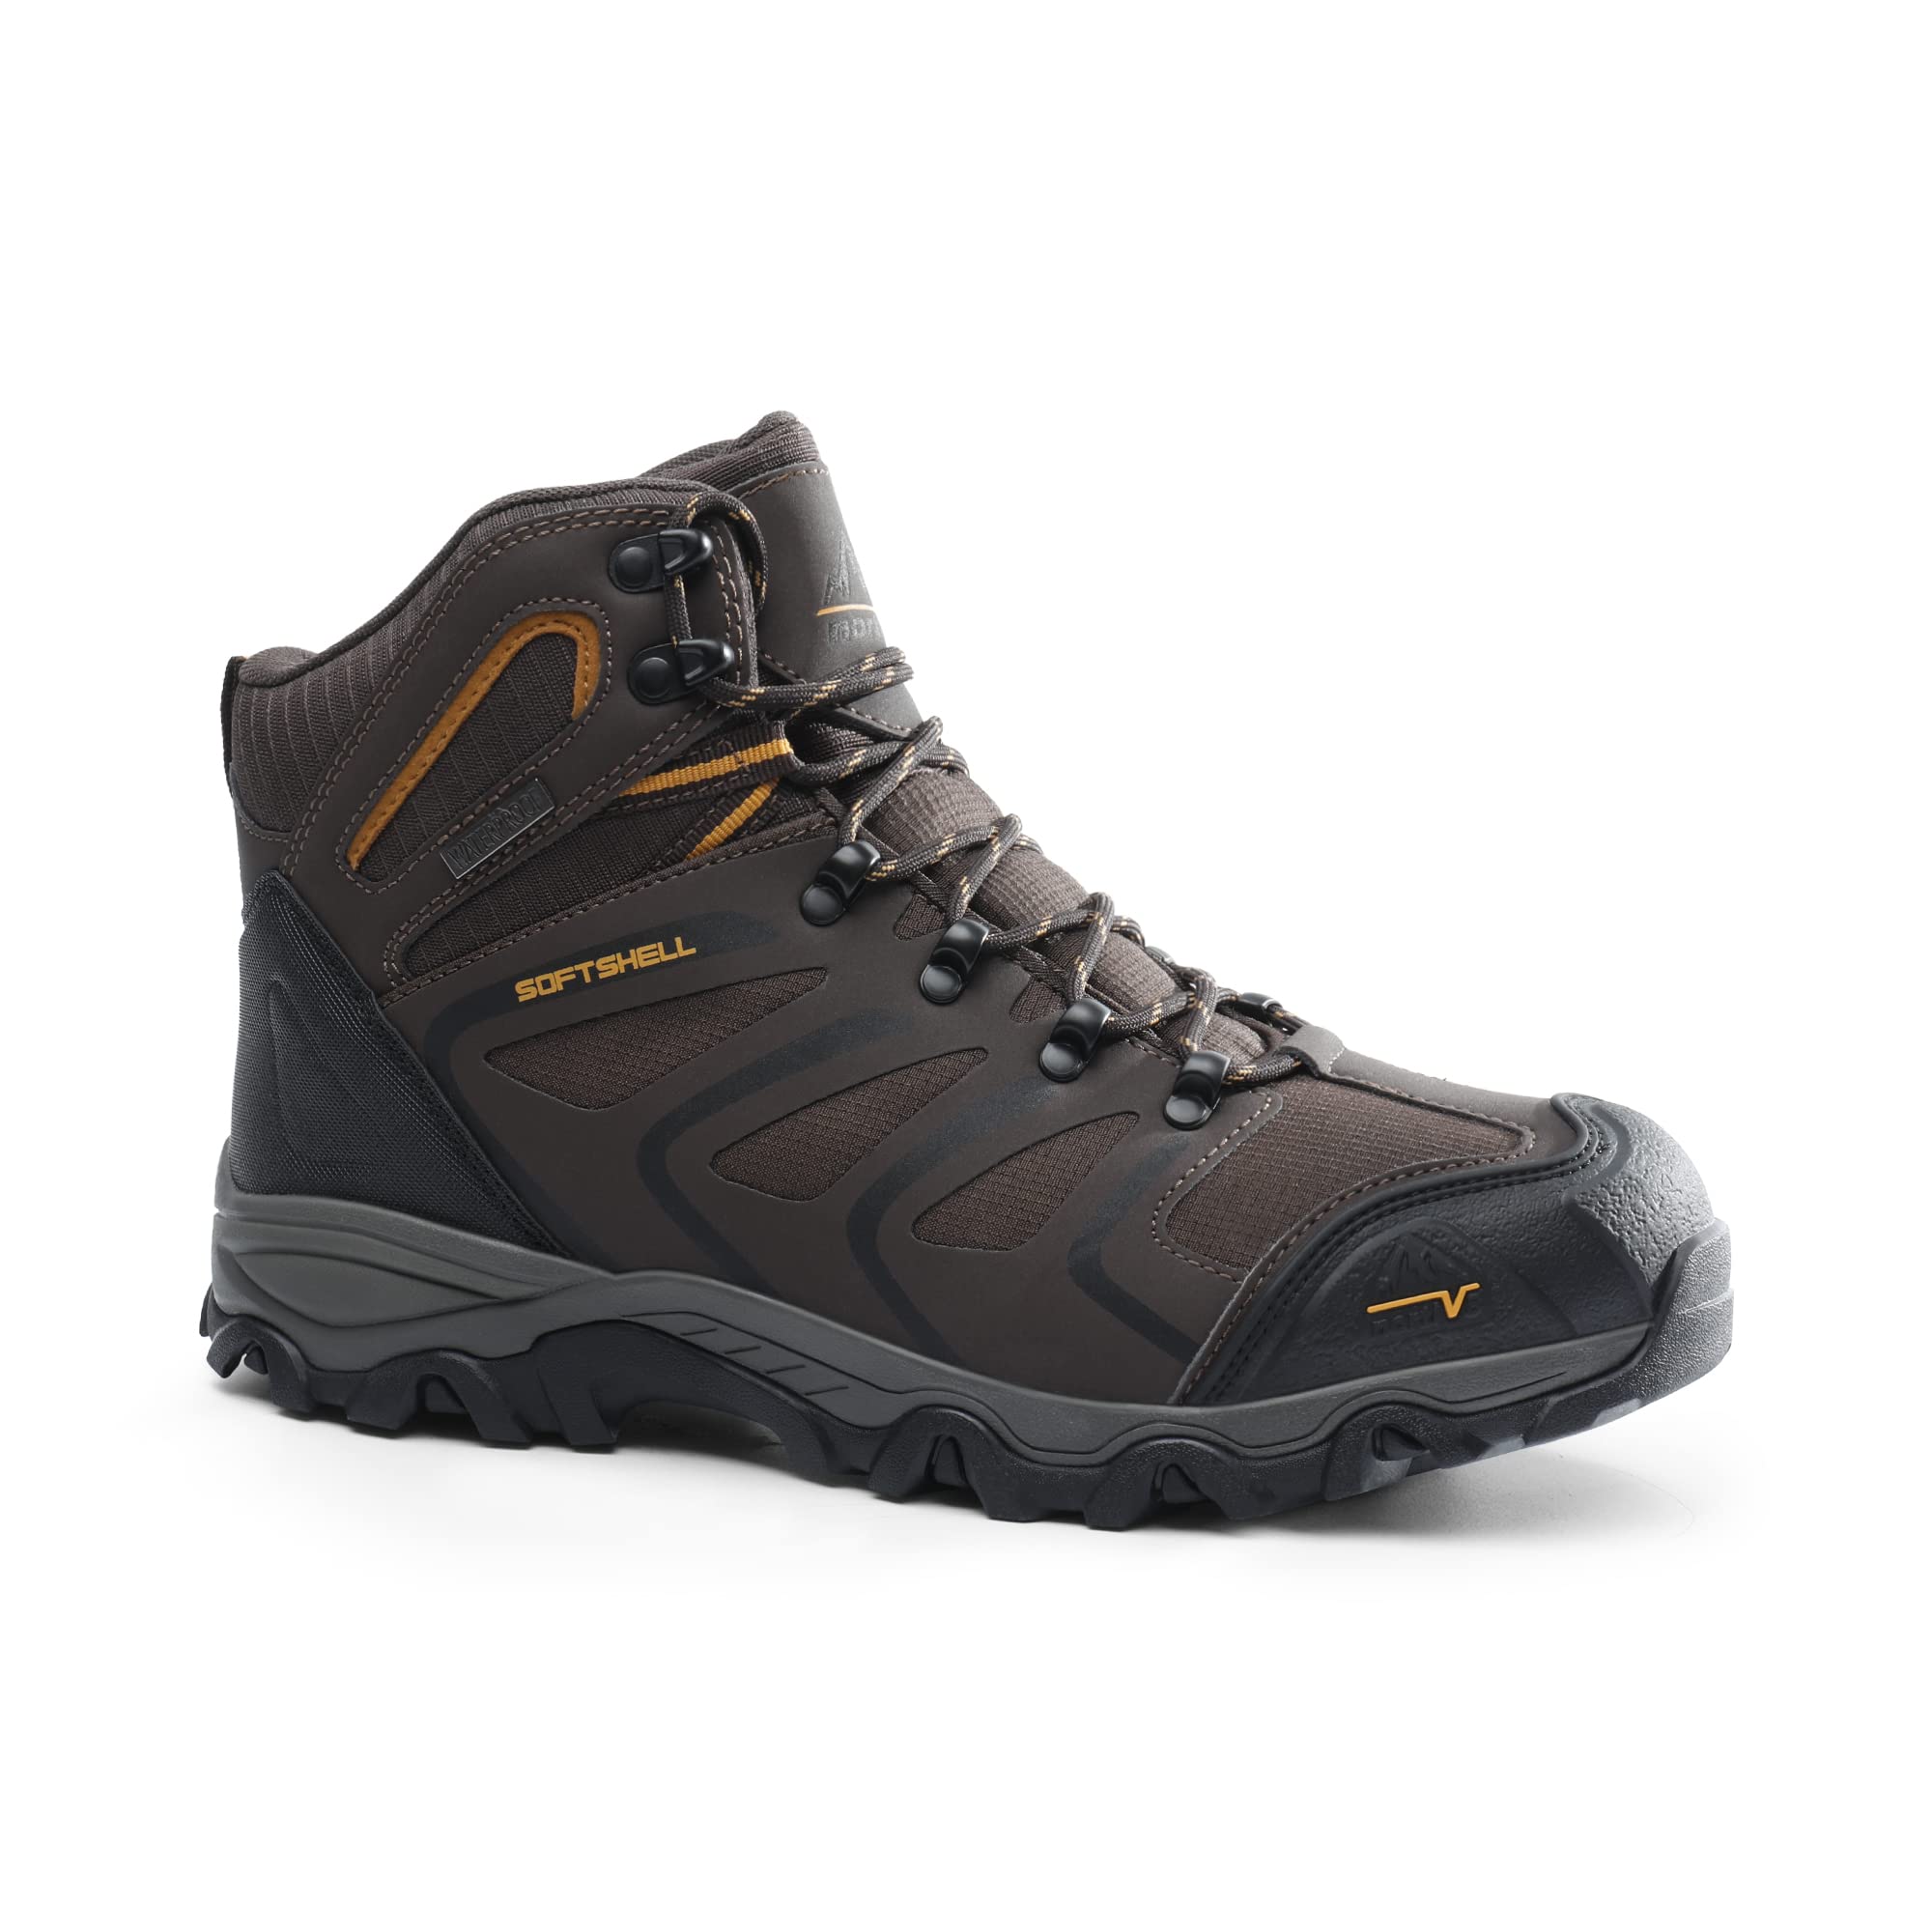 NORTIV 8 Men's Ankle High Waterproof Hiking Boots Outdoor Lightweight Shoes Trekking Trails